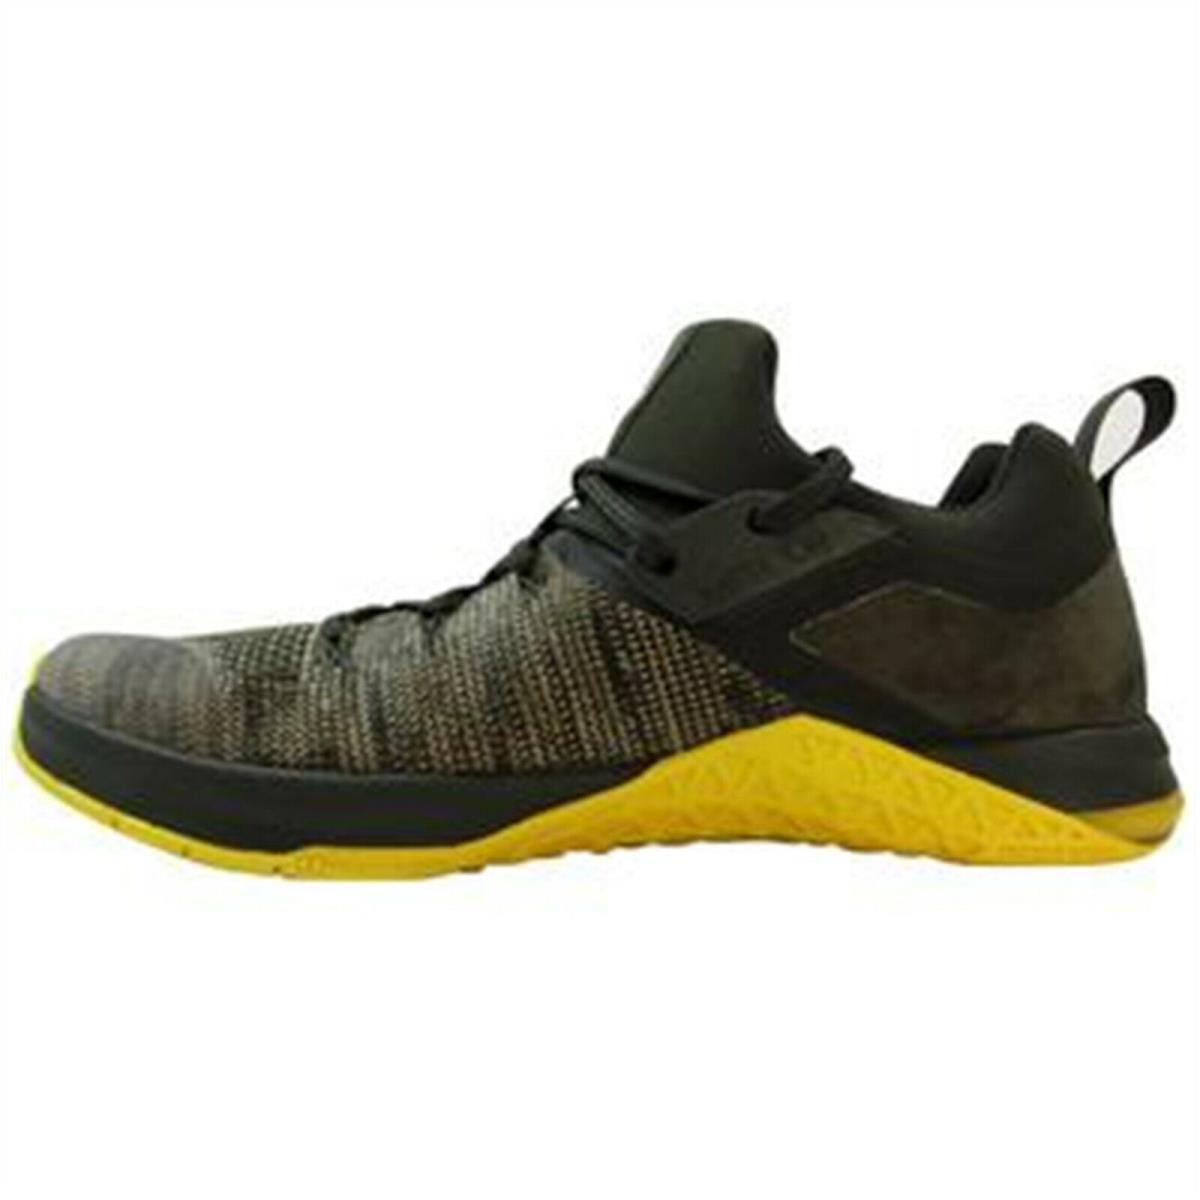 Nike shoes Metcon Flyknit - SEQUOIA / BRIGHT CITRON 4